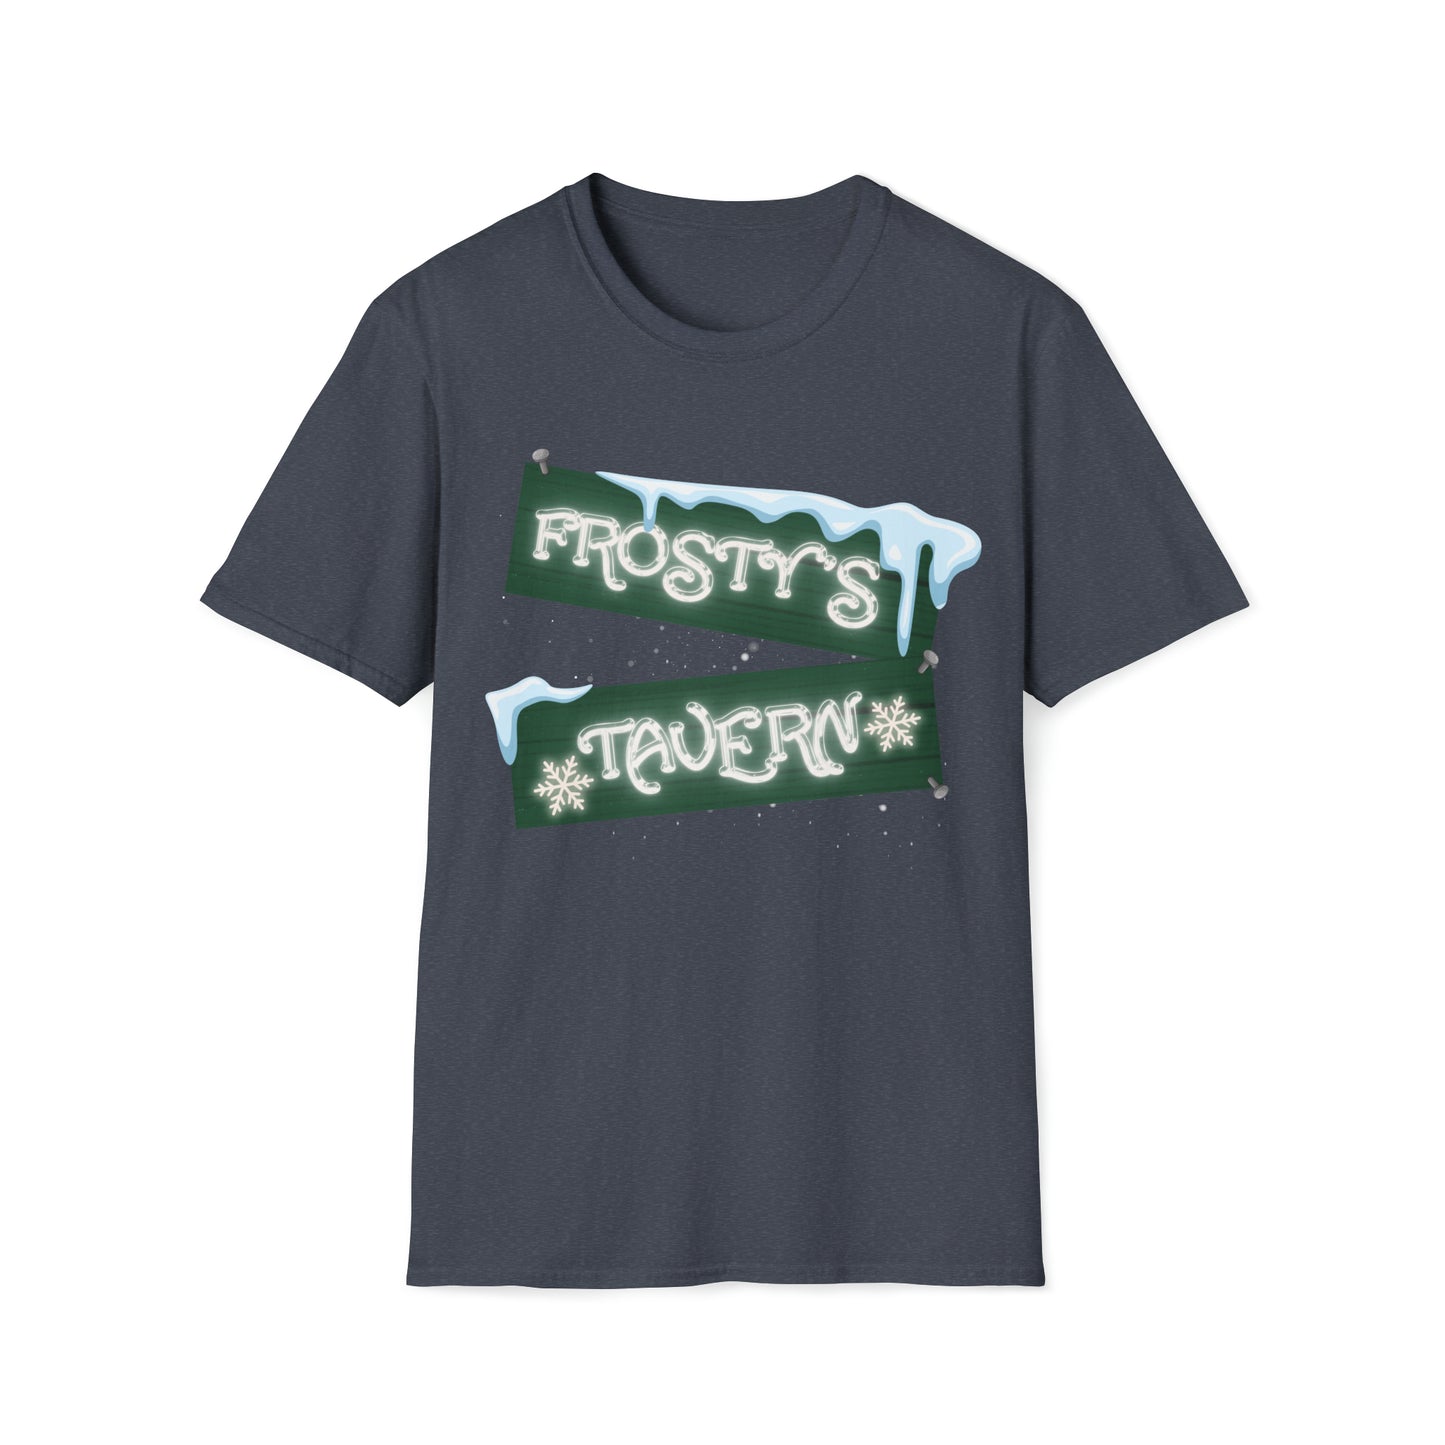 Frosty's Tavern - Softstyle T-Shirt